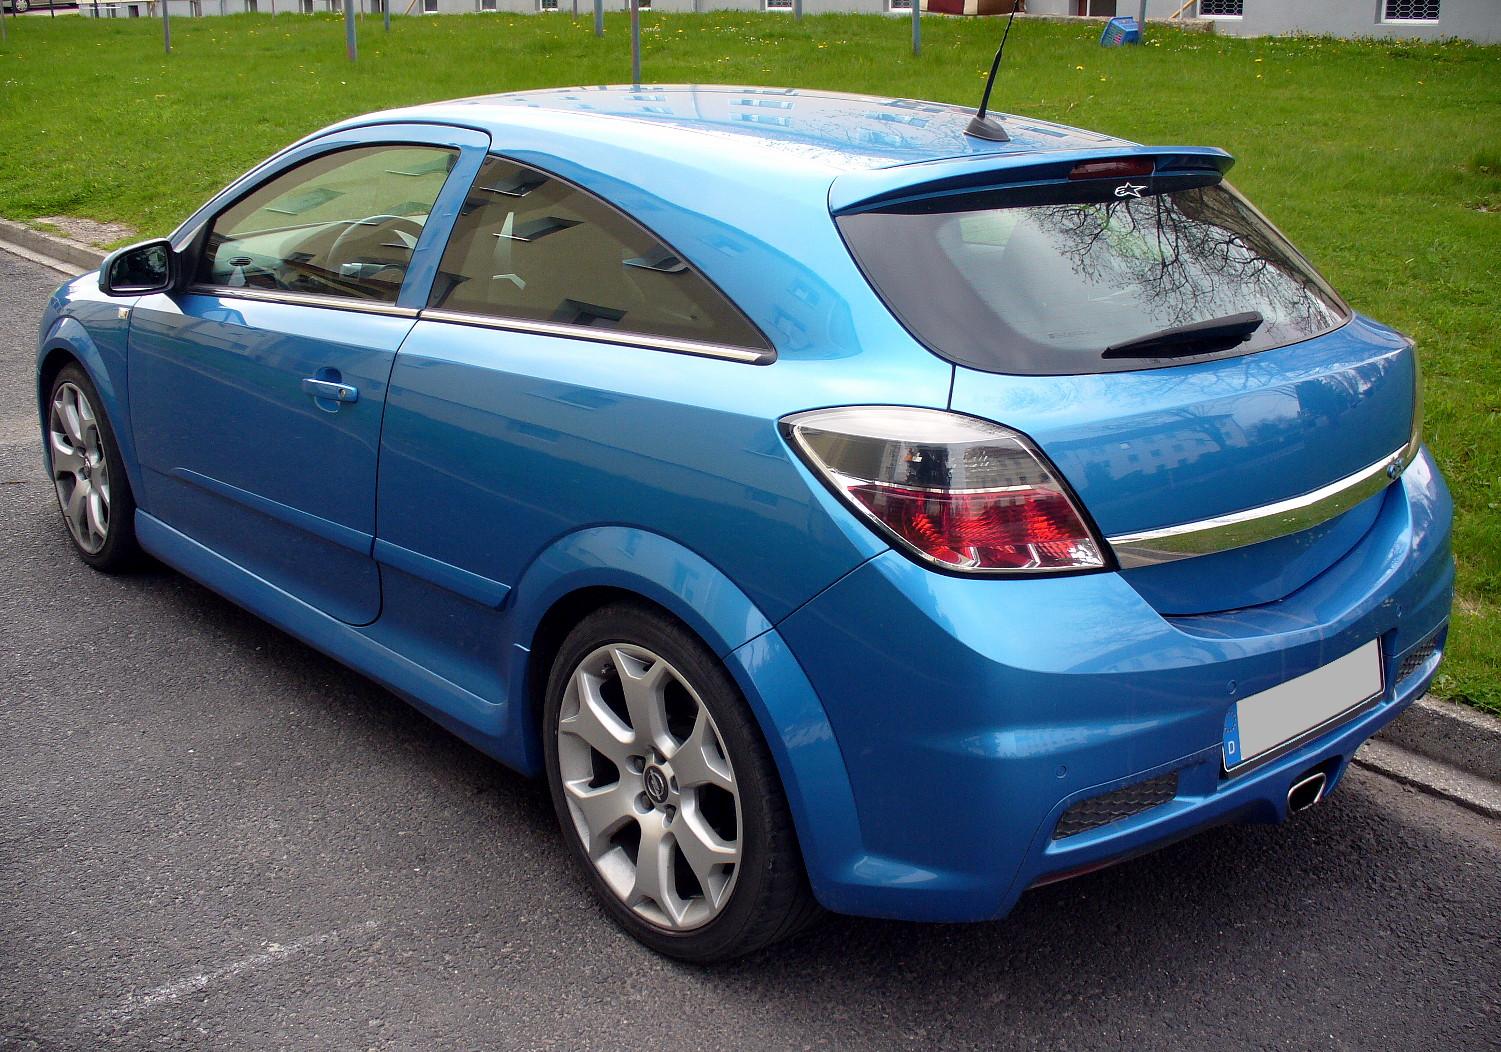 File:Opel Astra H rear 20091011.jpg - Wikimedia Commons